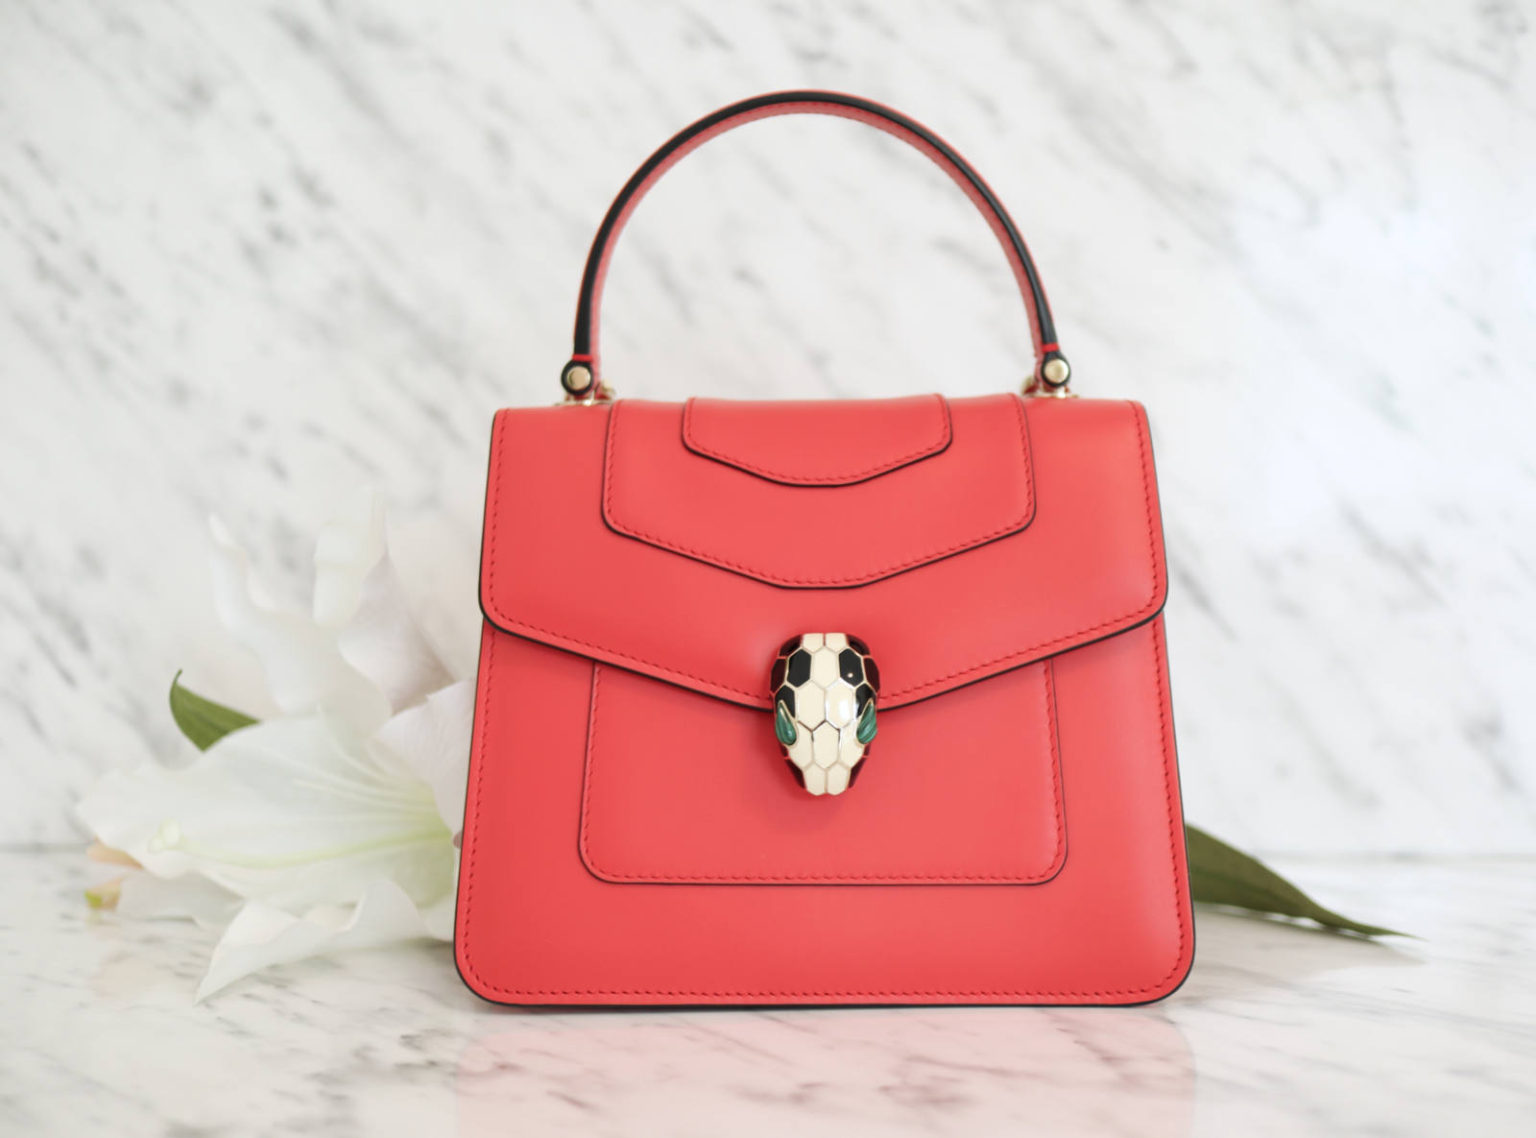 My minimalist designer handbag collection - Kim Bedene